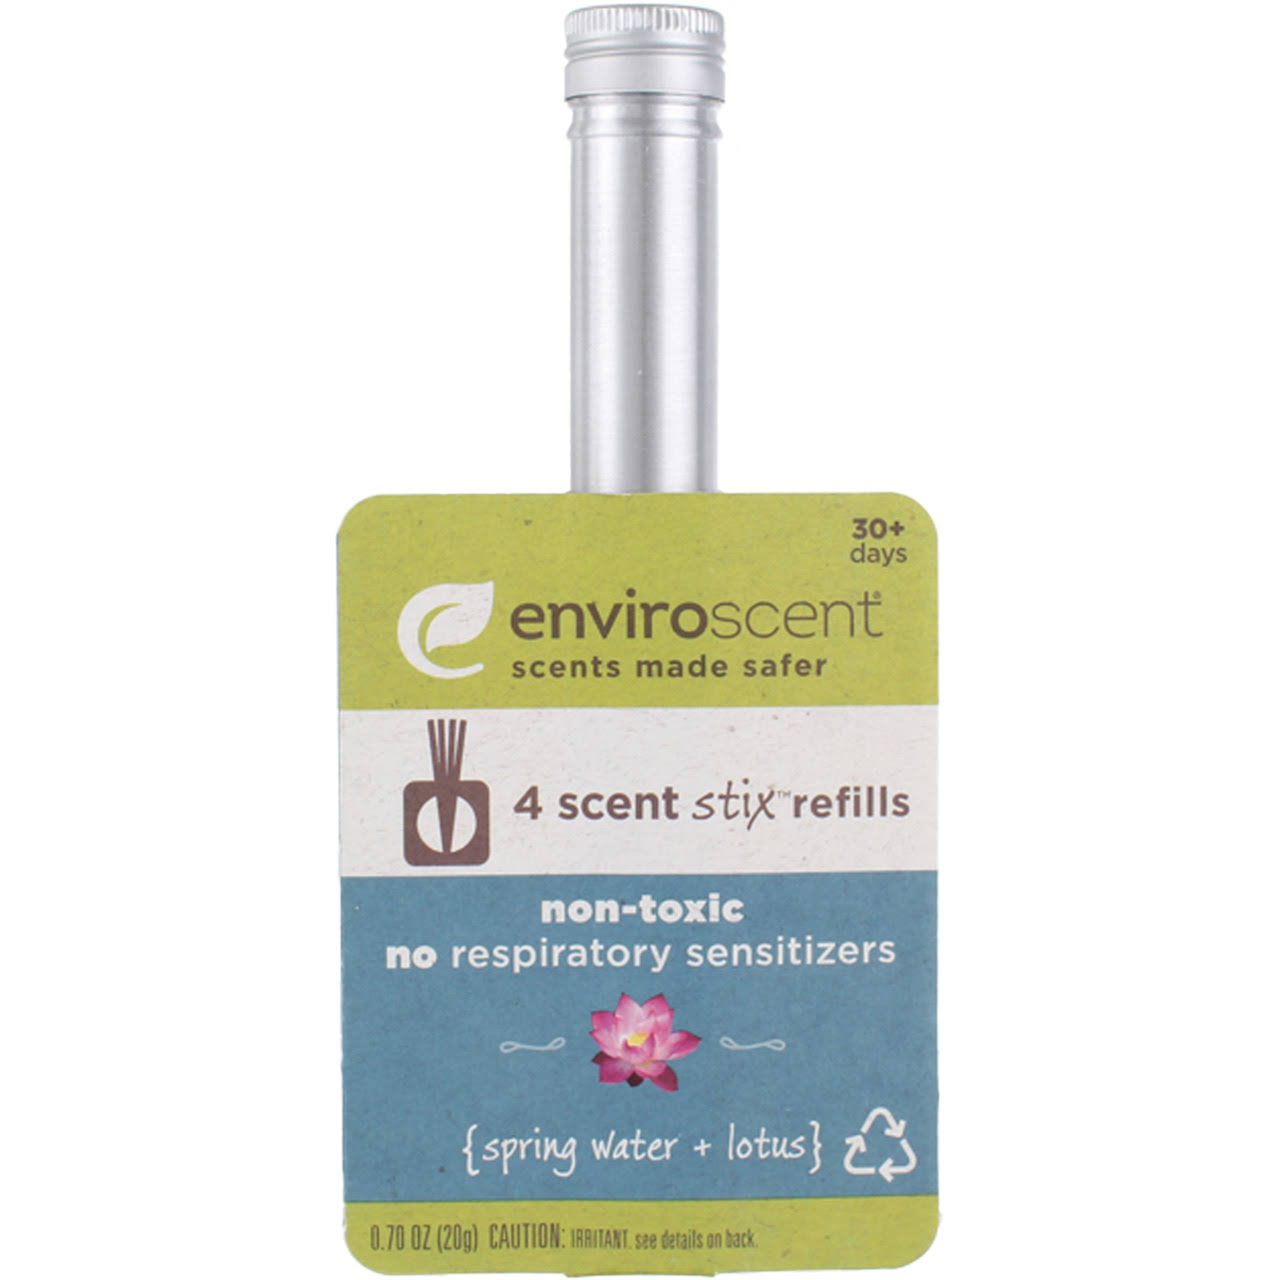 Enviroscent Stix Refills, Spring Water + Lotus - 4 refills, 0.70 oz